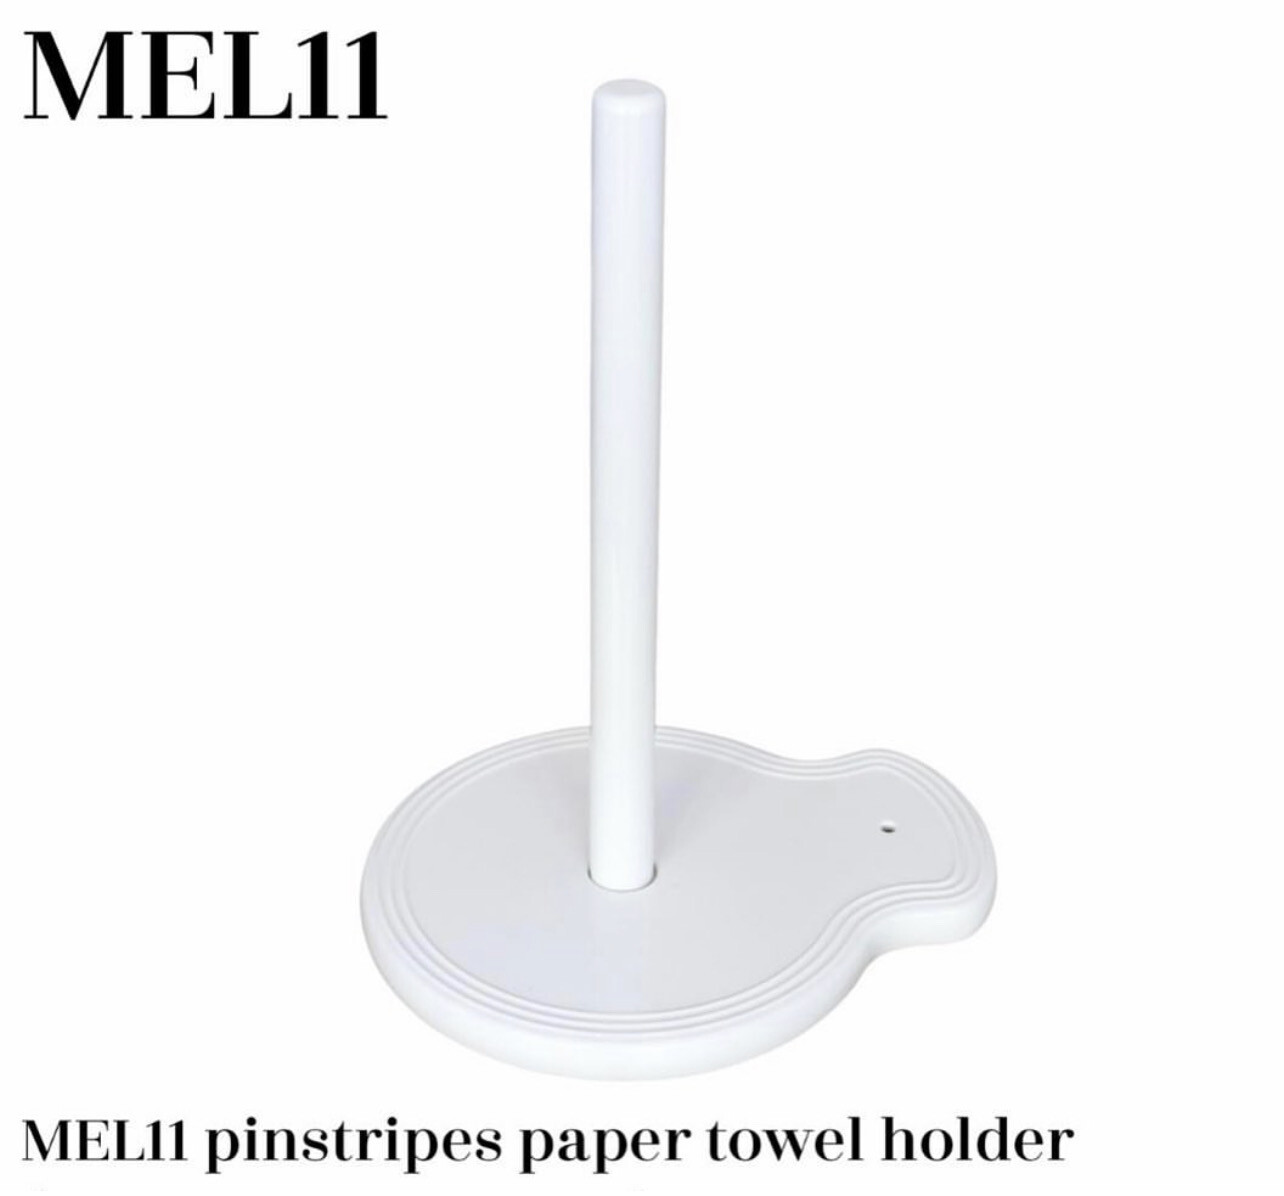 MEL 11 Pinstripe Paper Towel Holder 9”x7.5”x13.5”